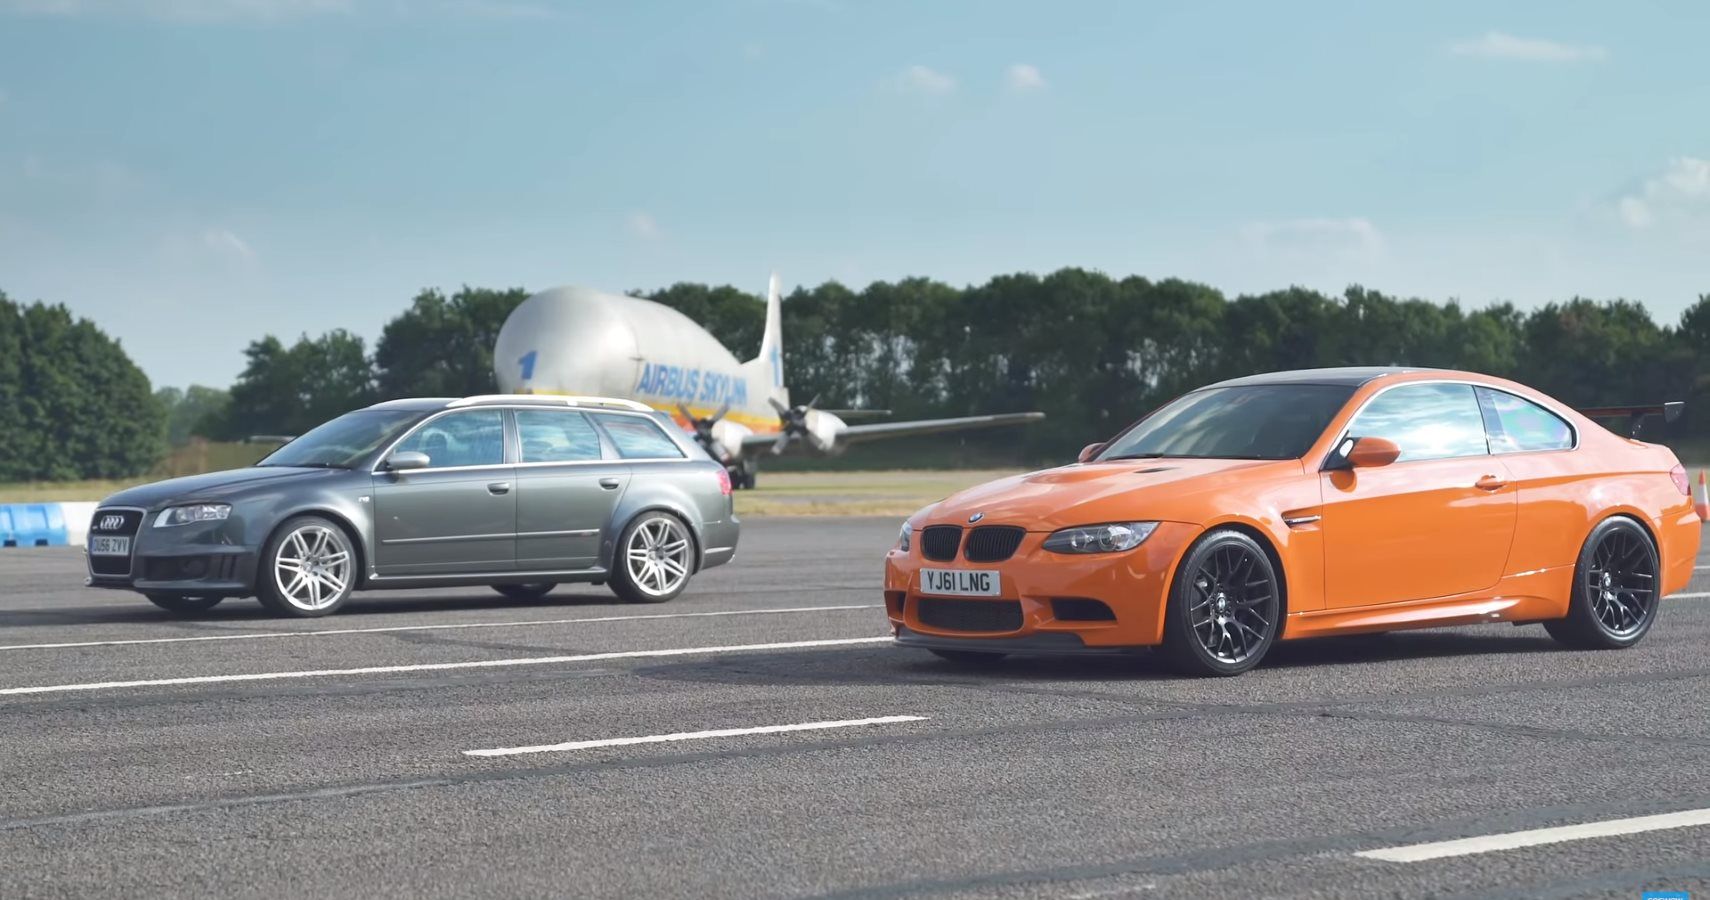 Watch A BMW E92 M3 GTS Take On An Audi RS4 B7 In Drag Race Action